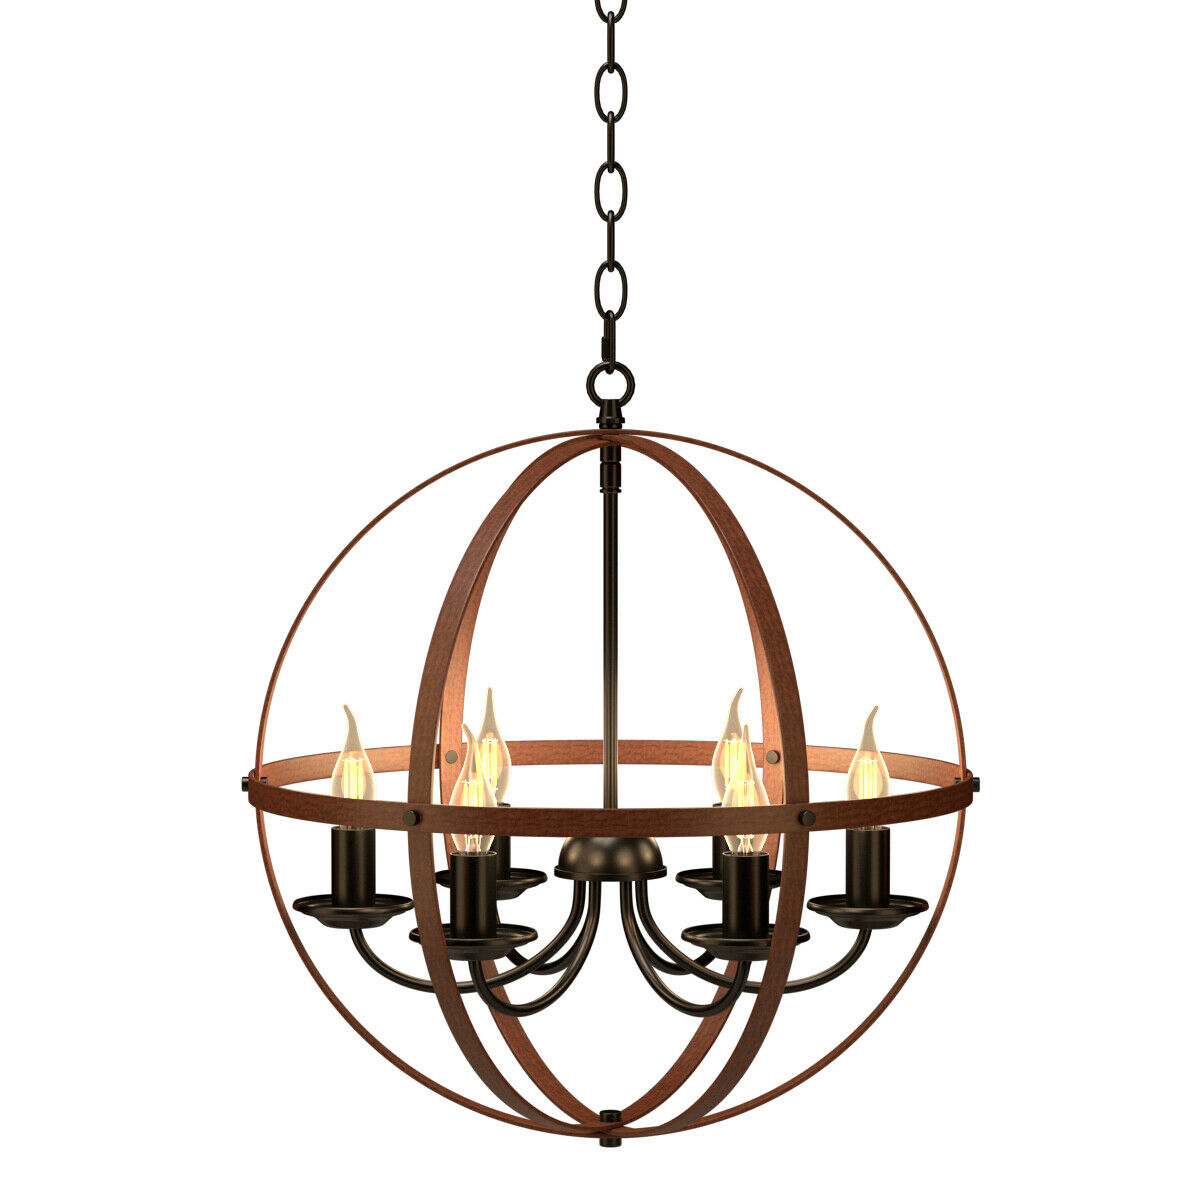 6-Light Orb Chandelier Rustic Vintage Ceiling Lamp W/Bronze Finish Light Fixture